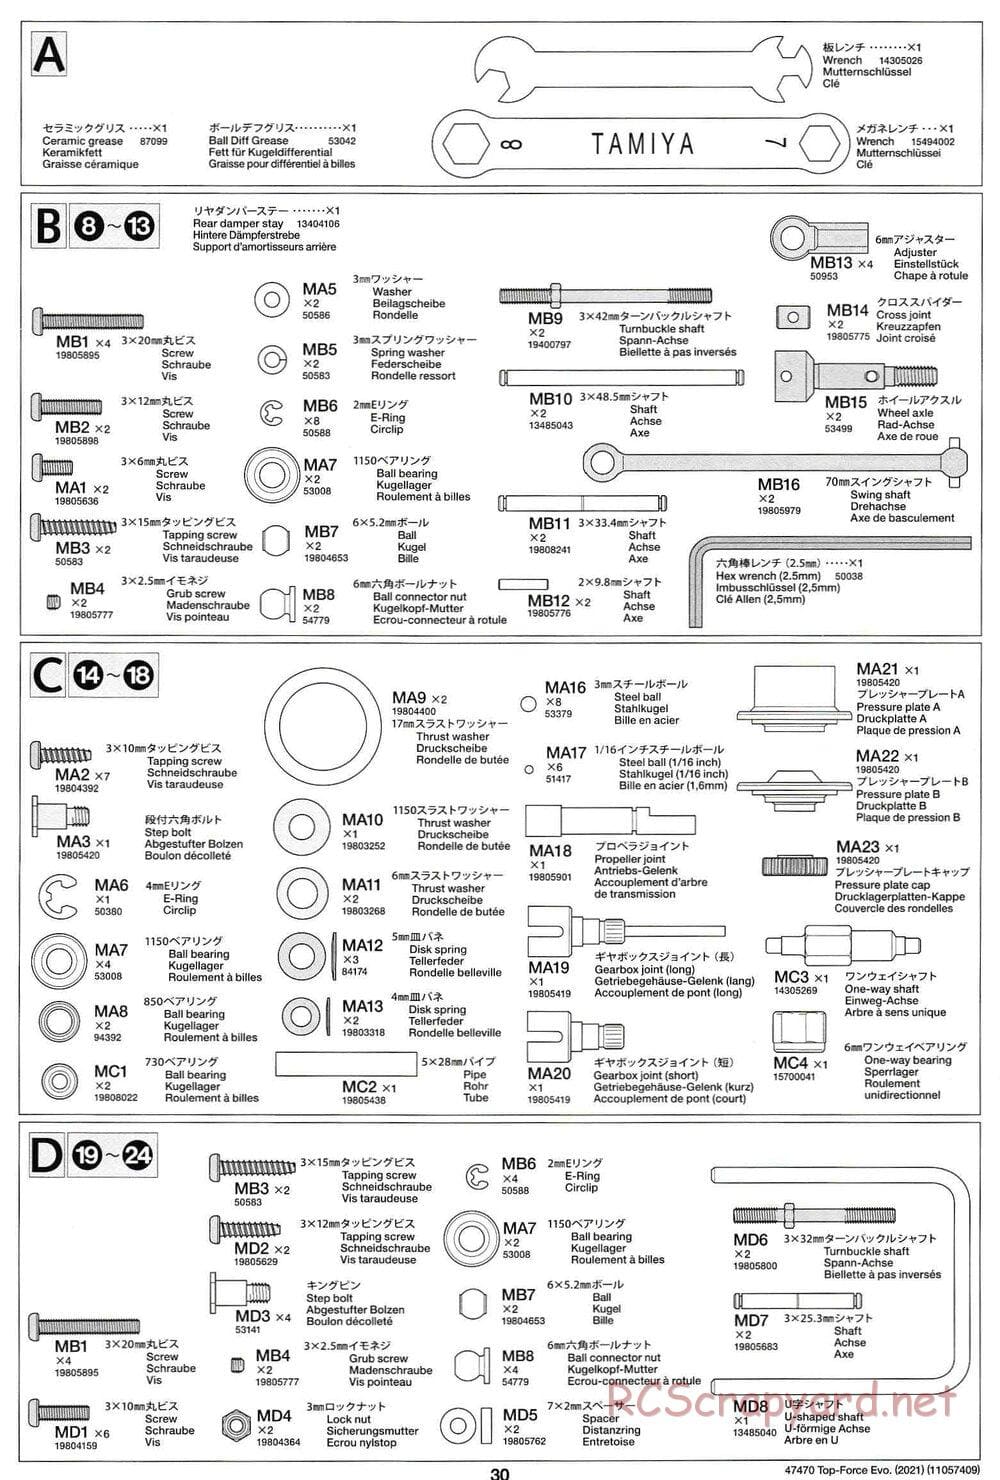 Tamiya - Top Force Evo 2021 - DF-01 Chassis - Manual - Page 30